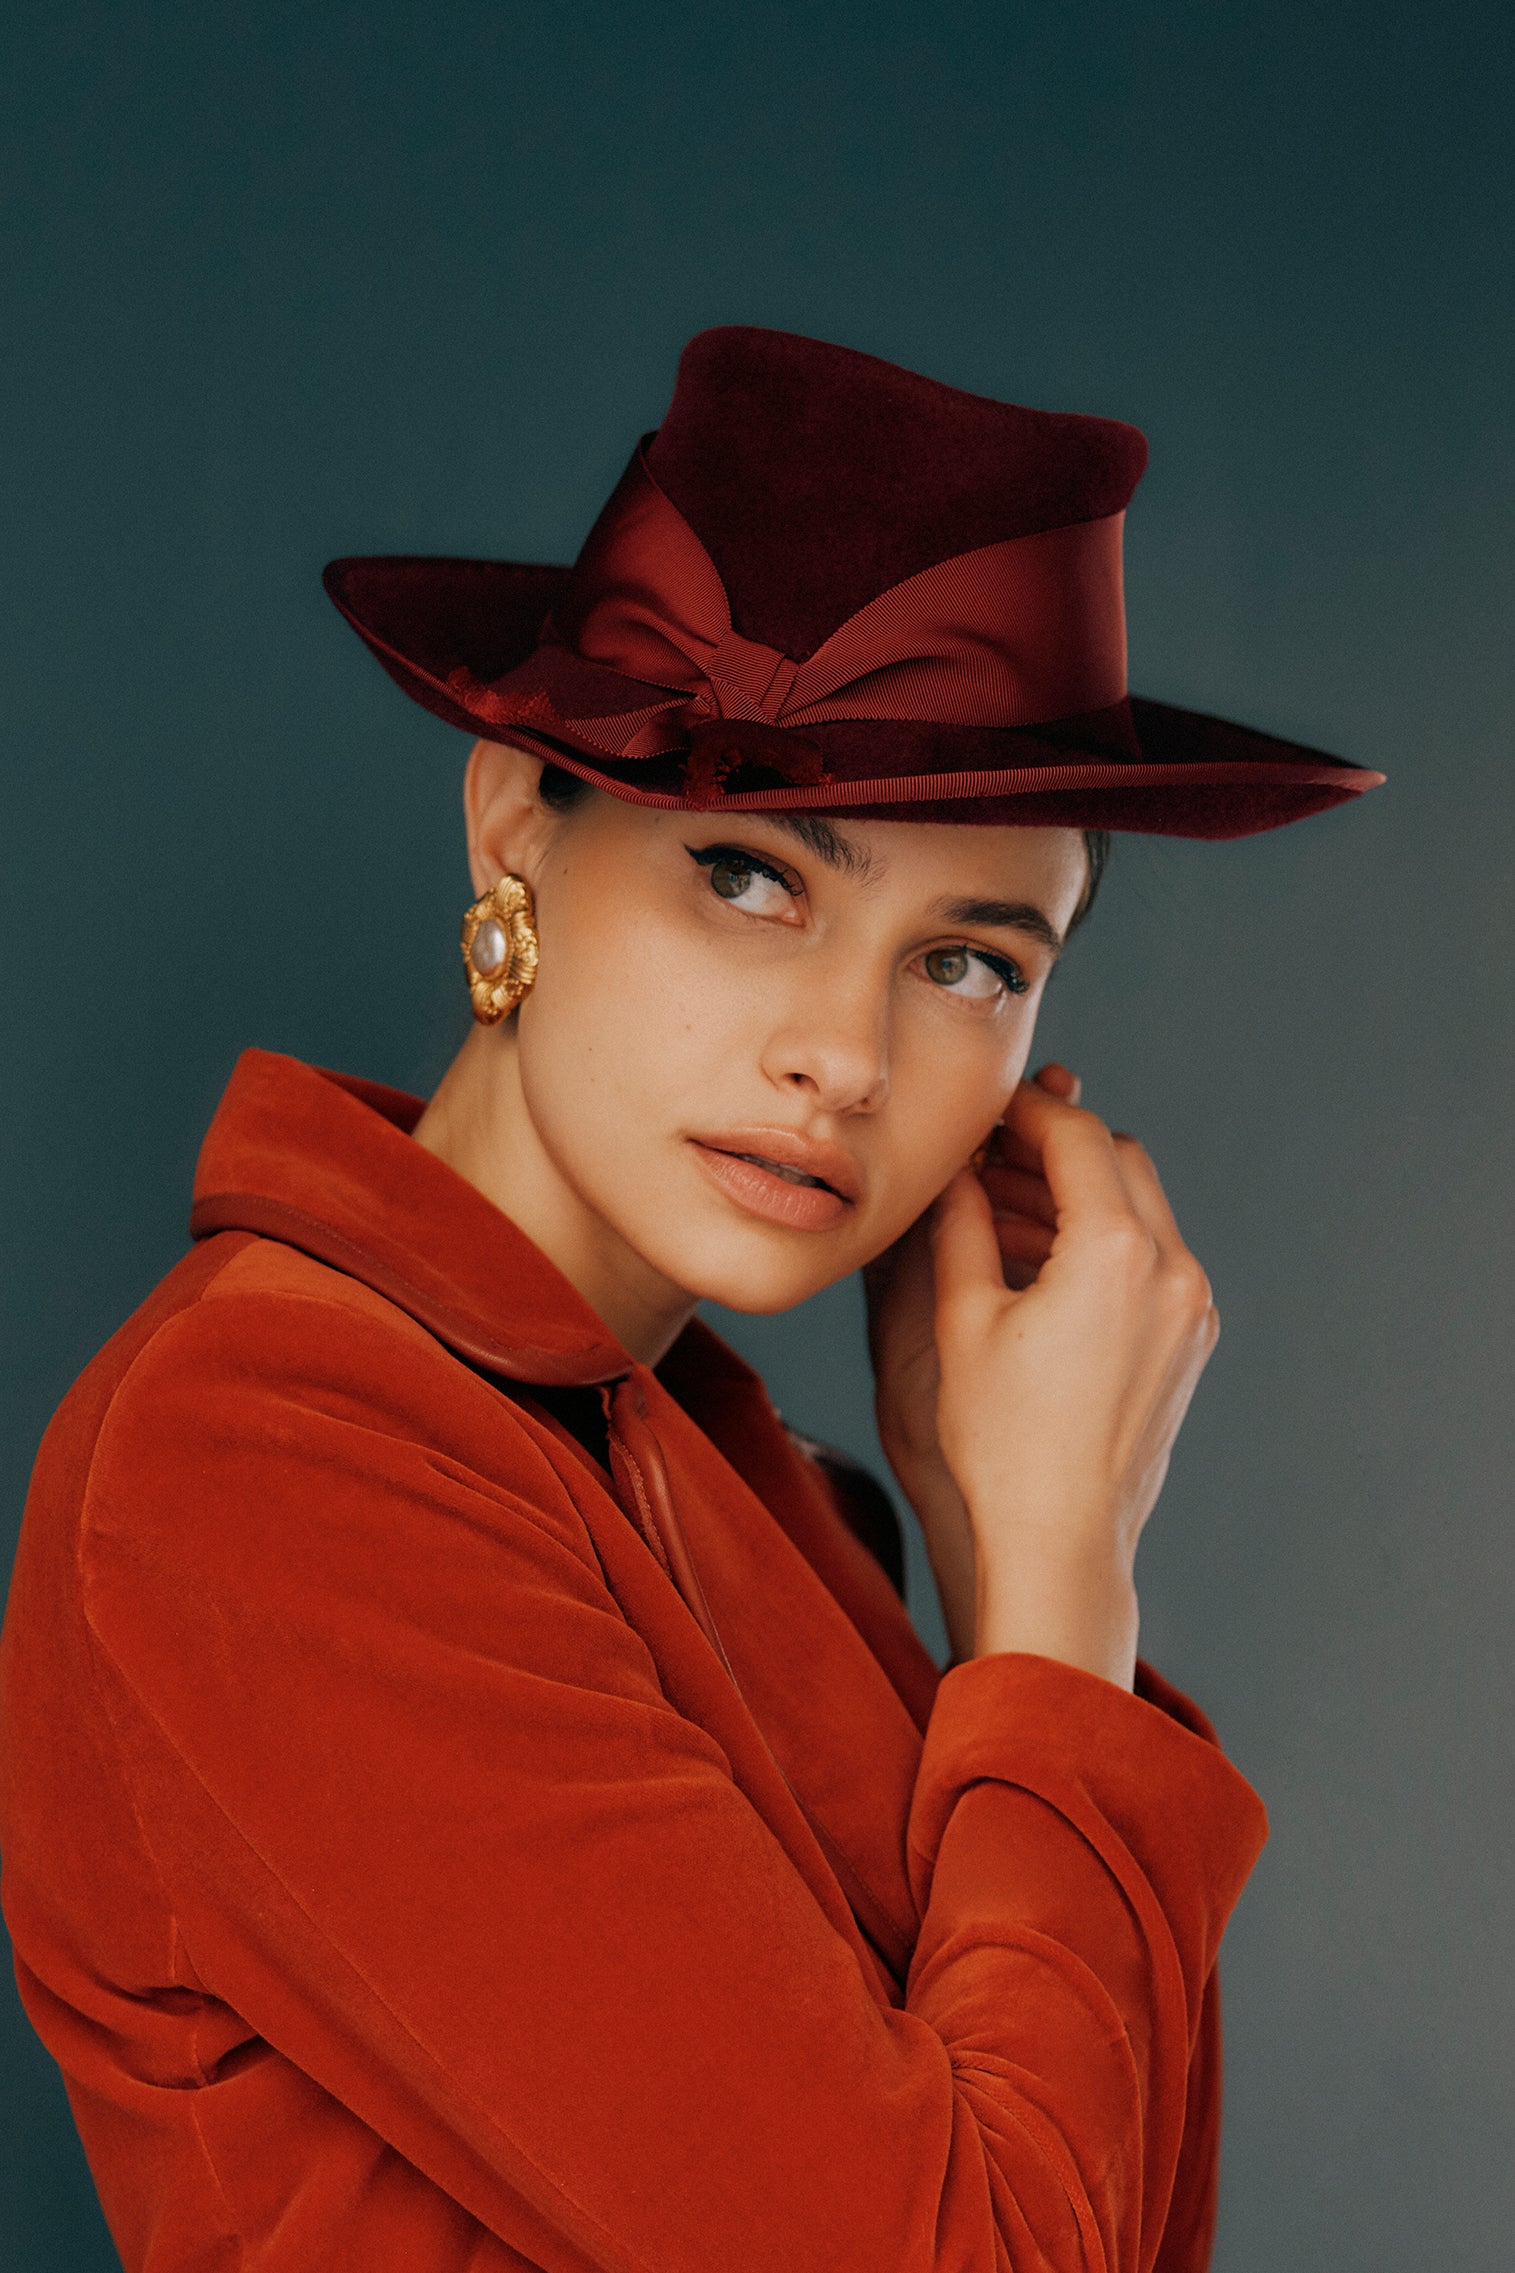 Eaton Trilby - Black Hats & Headpieces for Women - Lock & Co. Hatters London UK